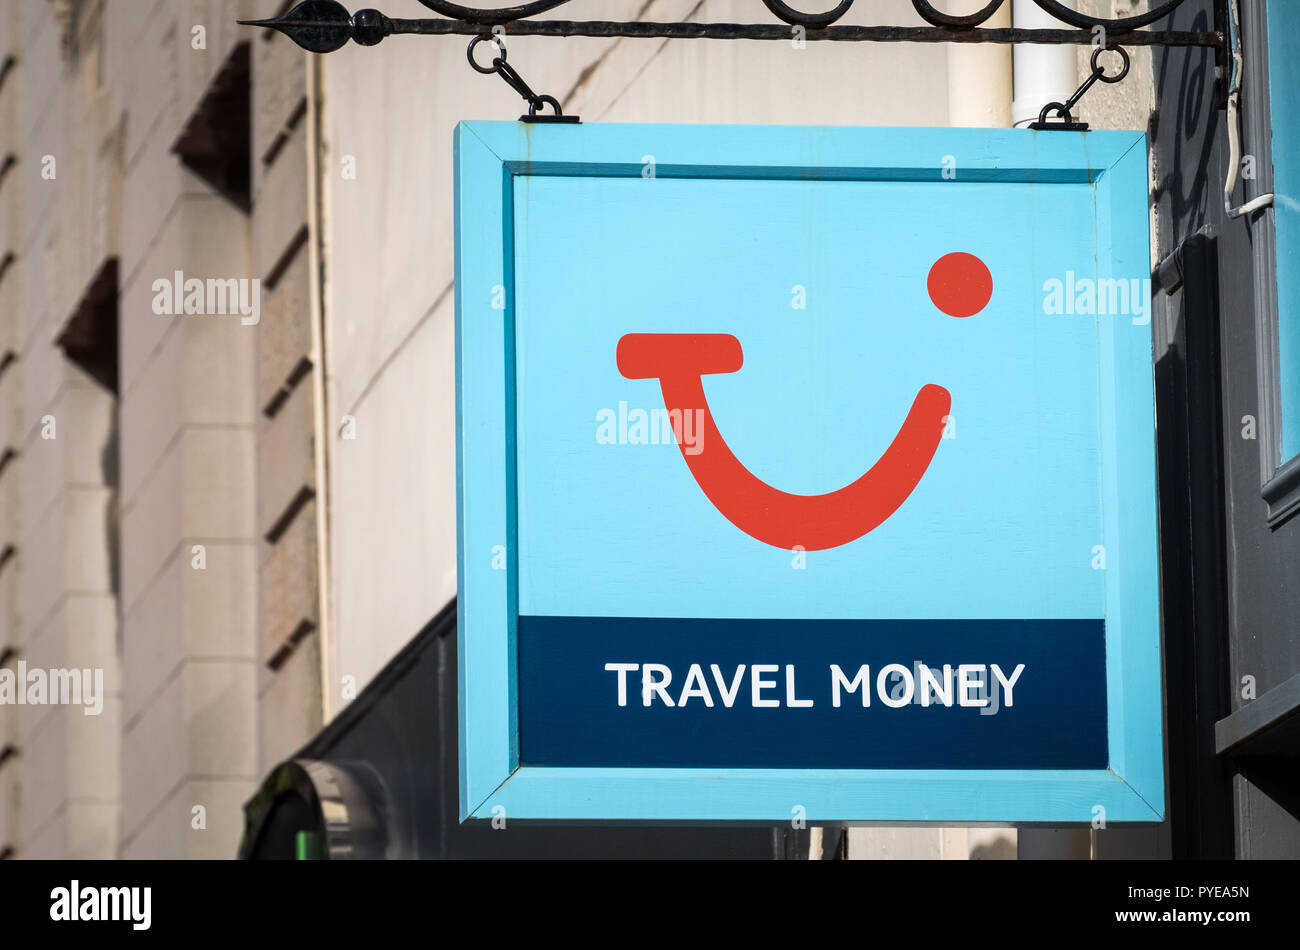 Tui Travel Money shop sign Stock Photo